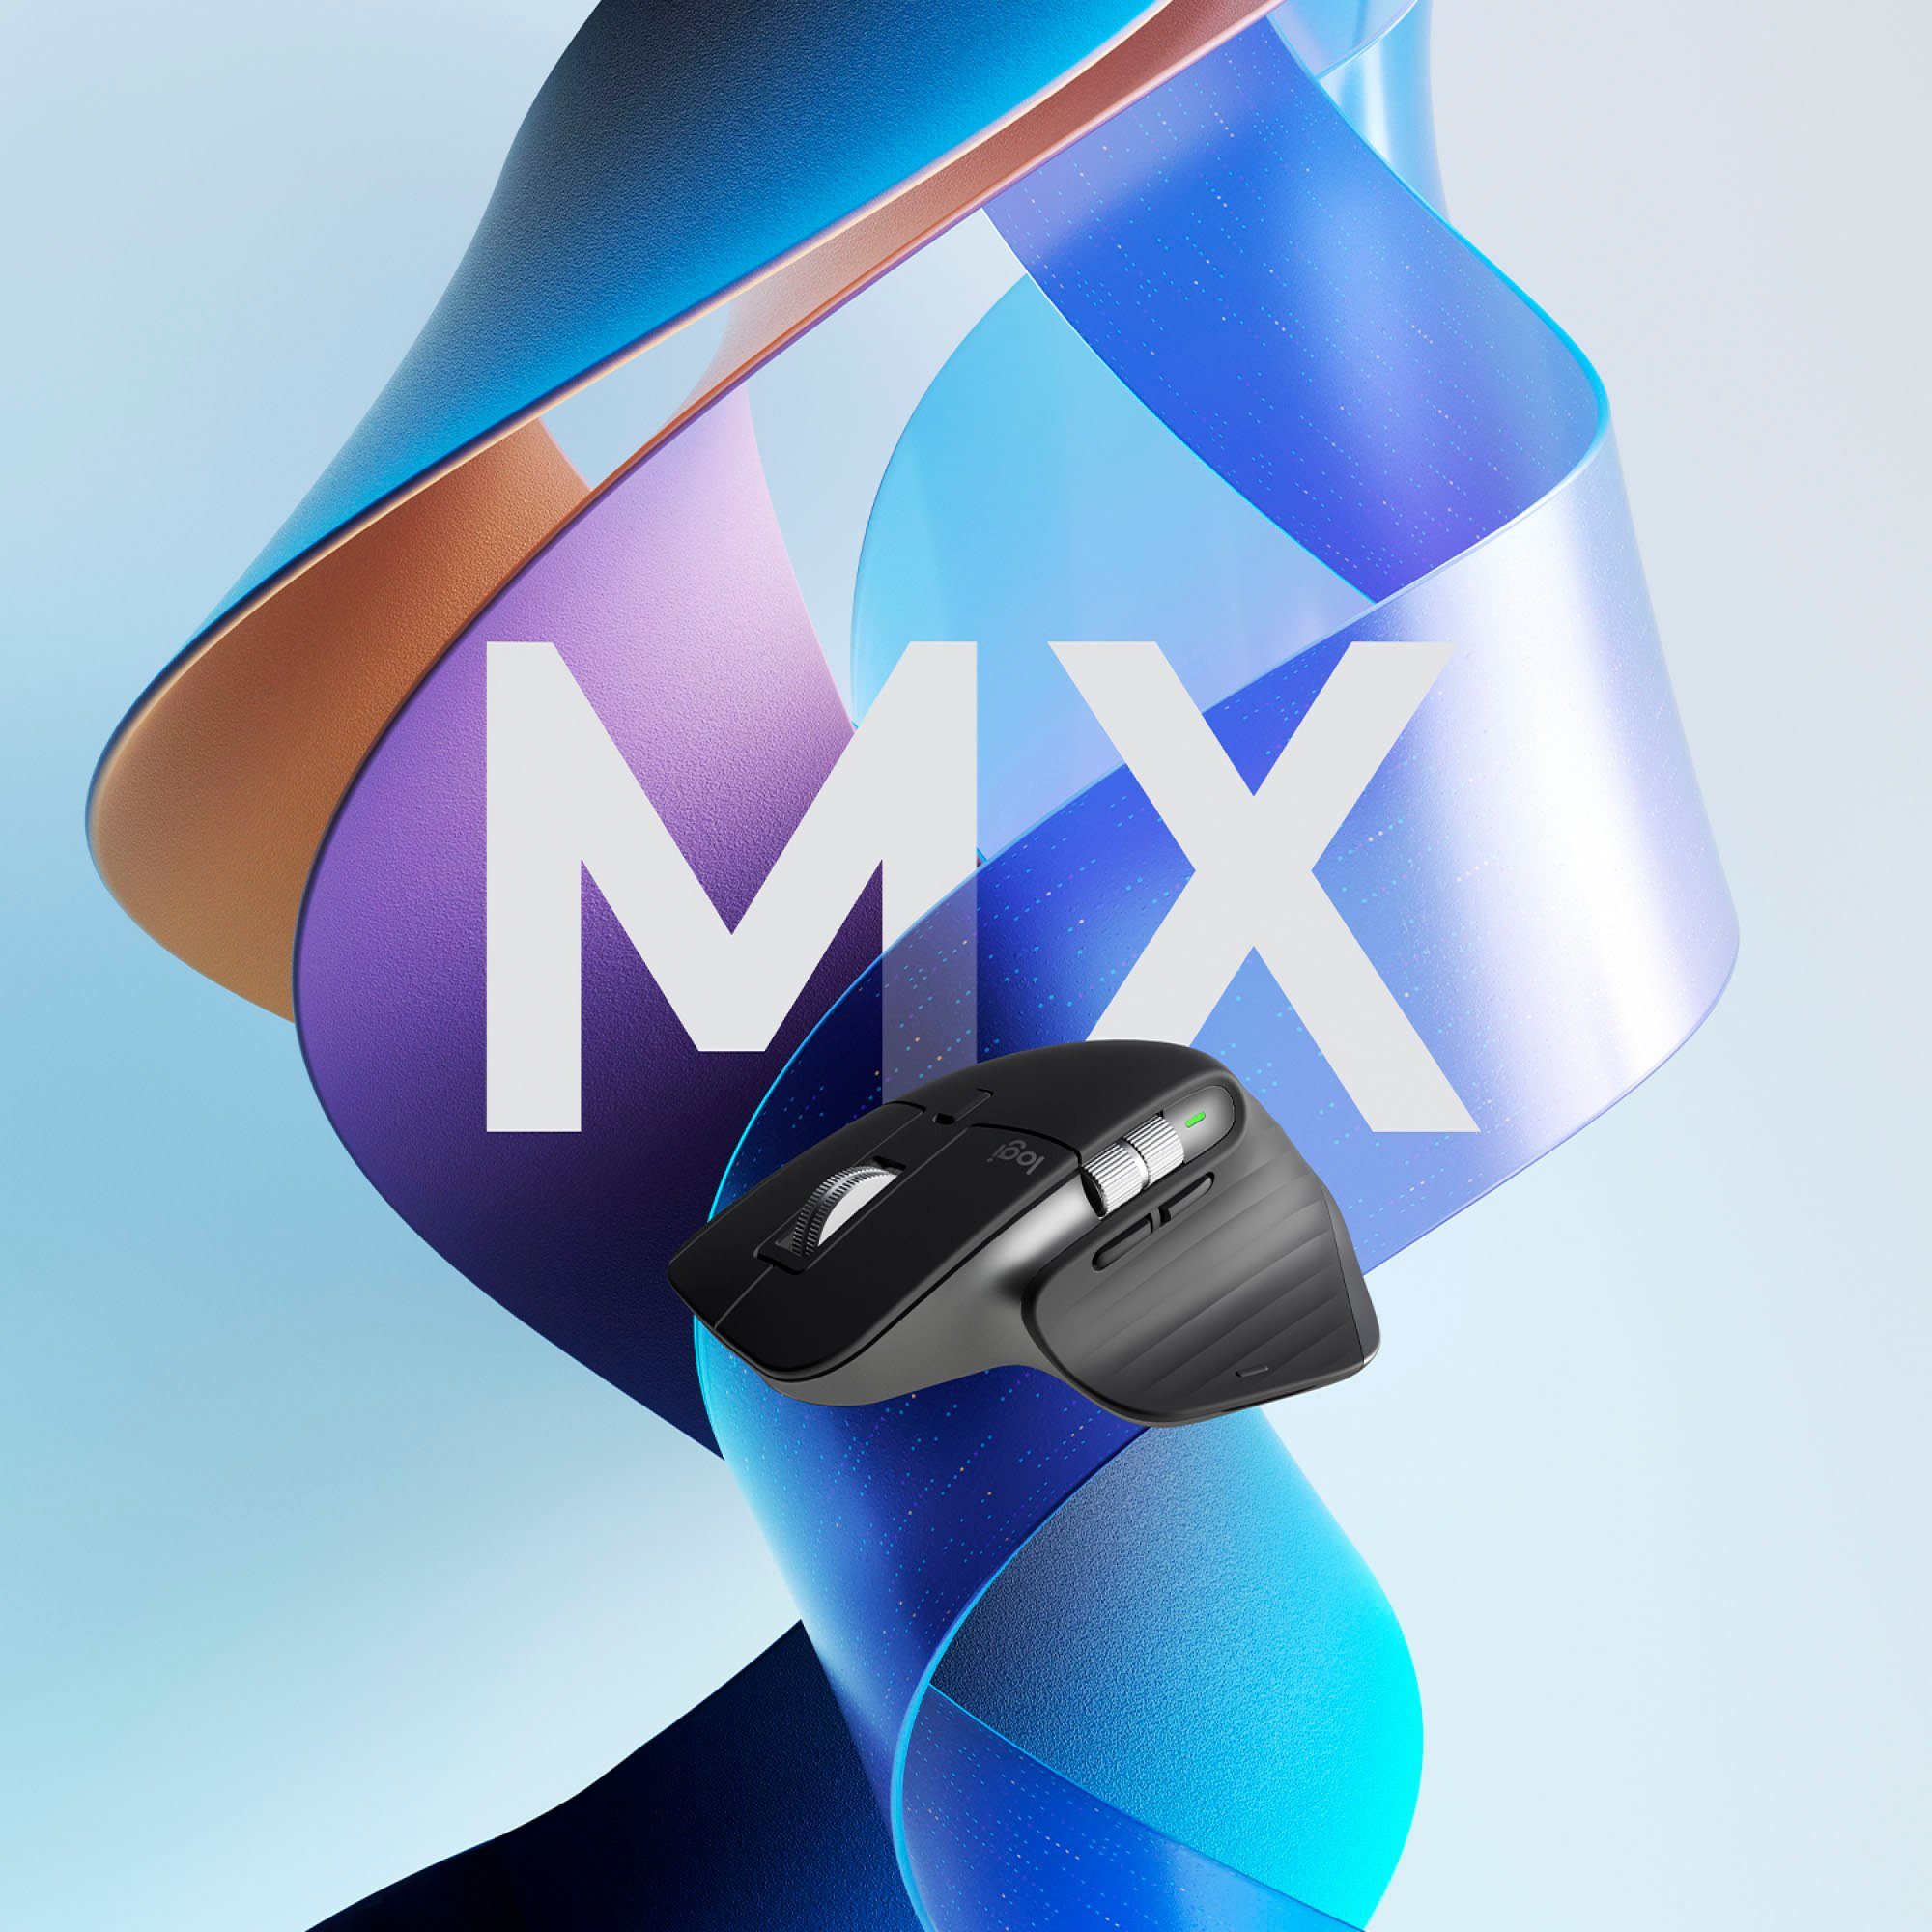 Logitech MX Master 3S Grau Maus (Bluetooth)